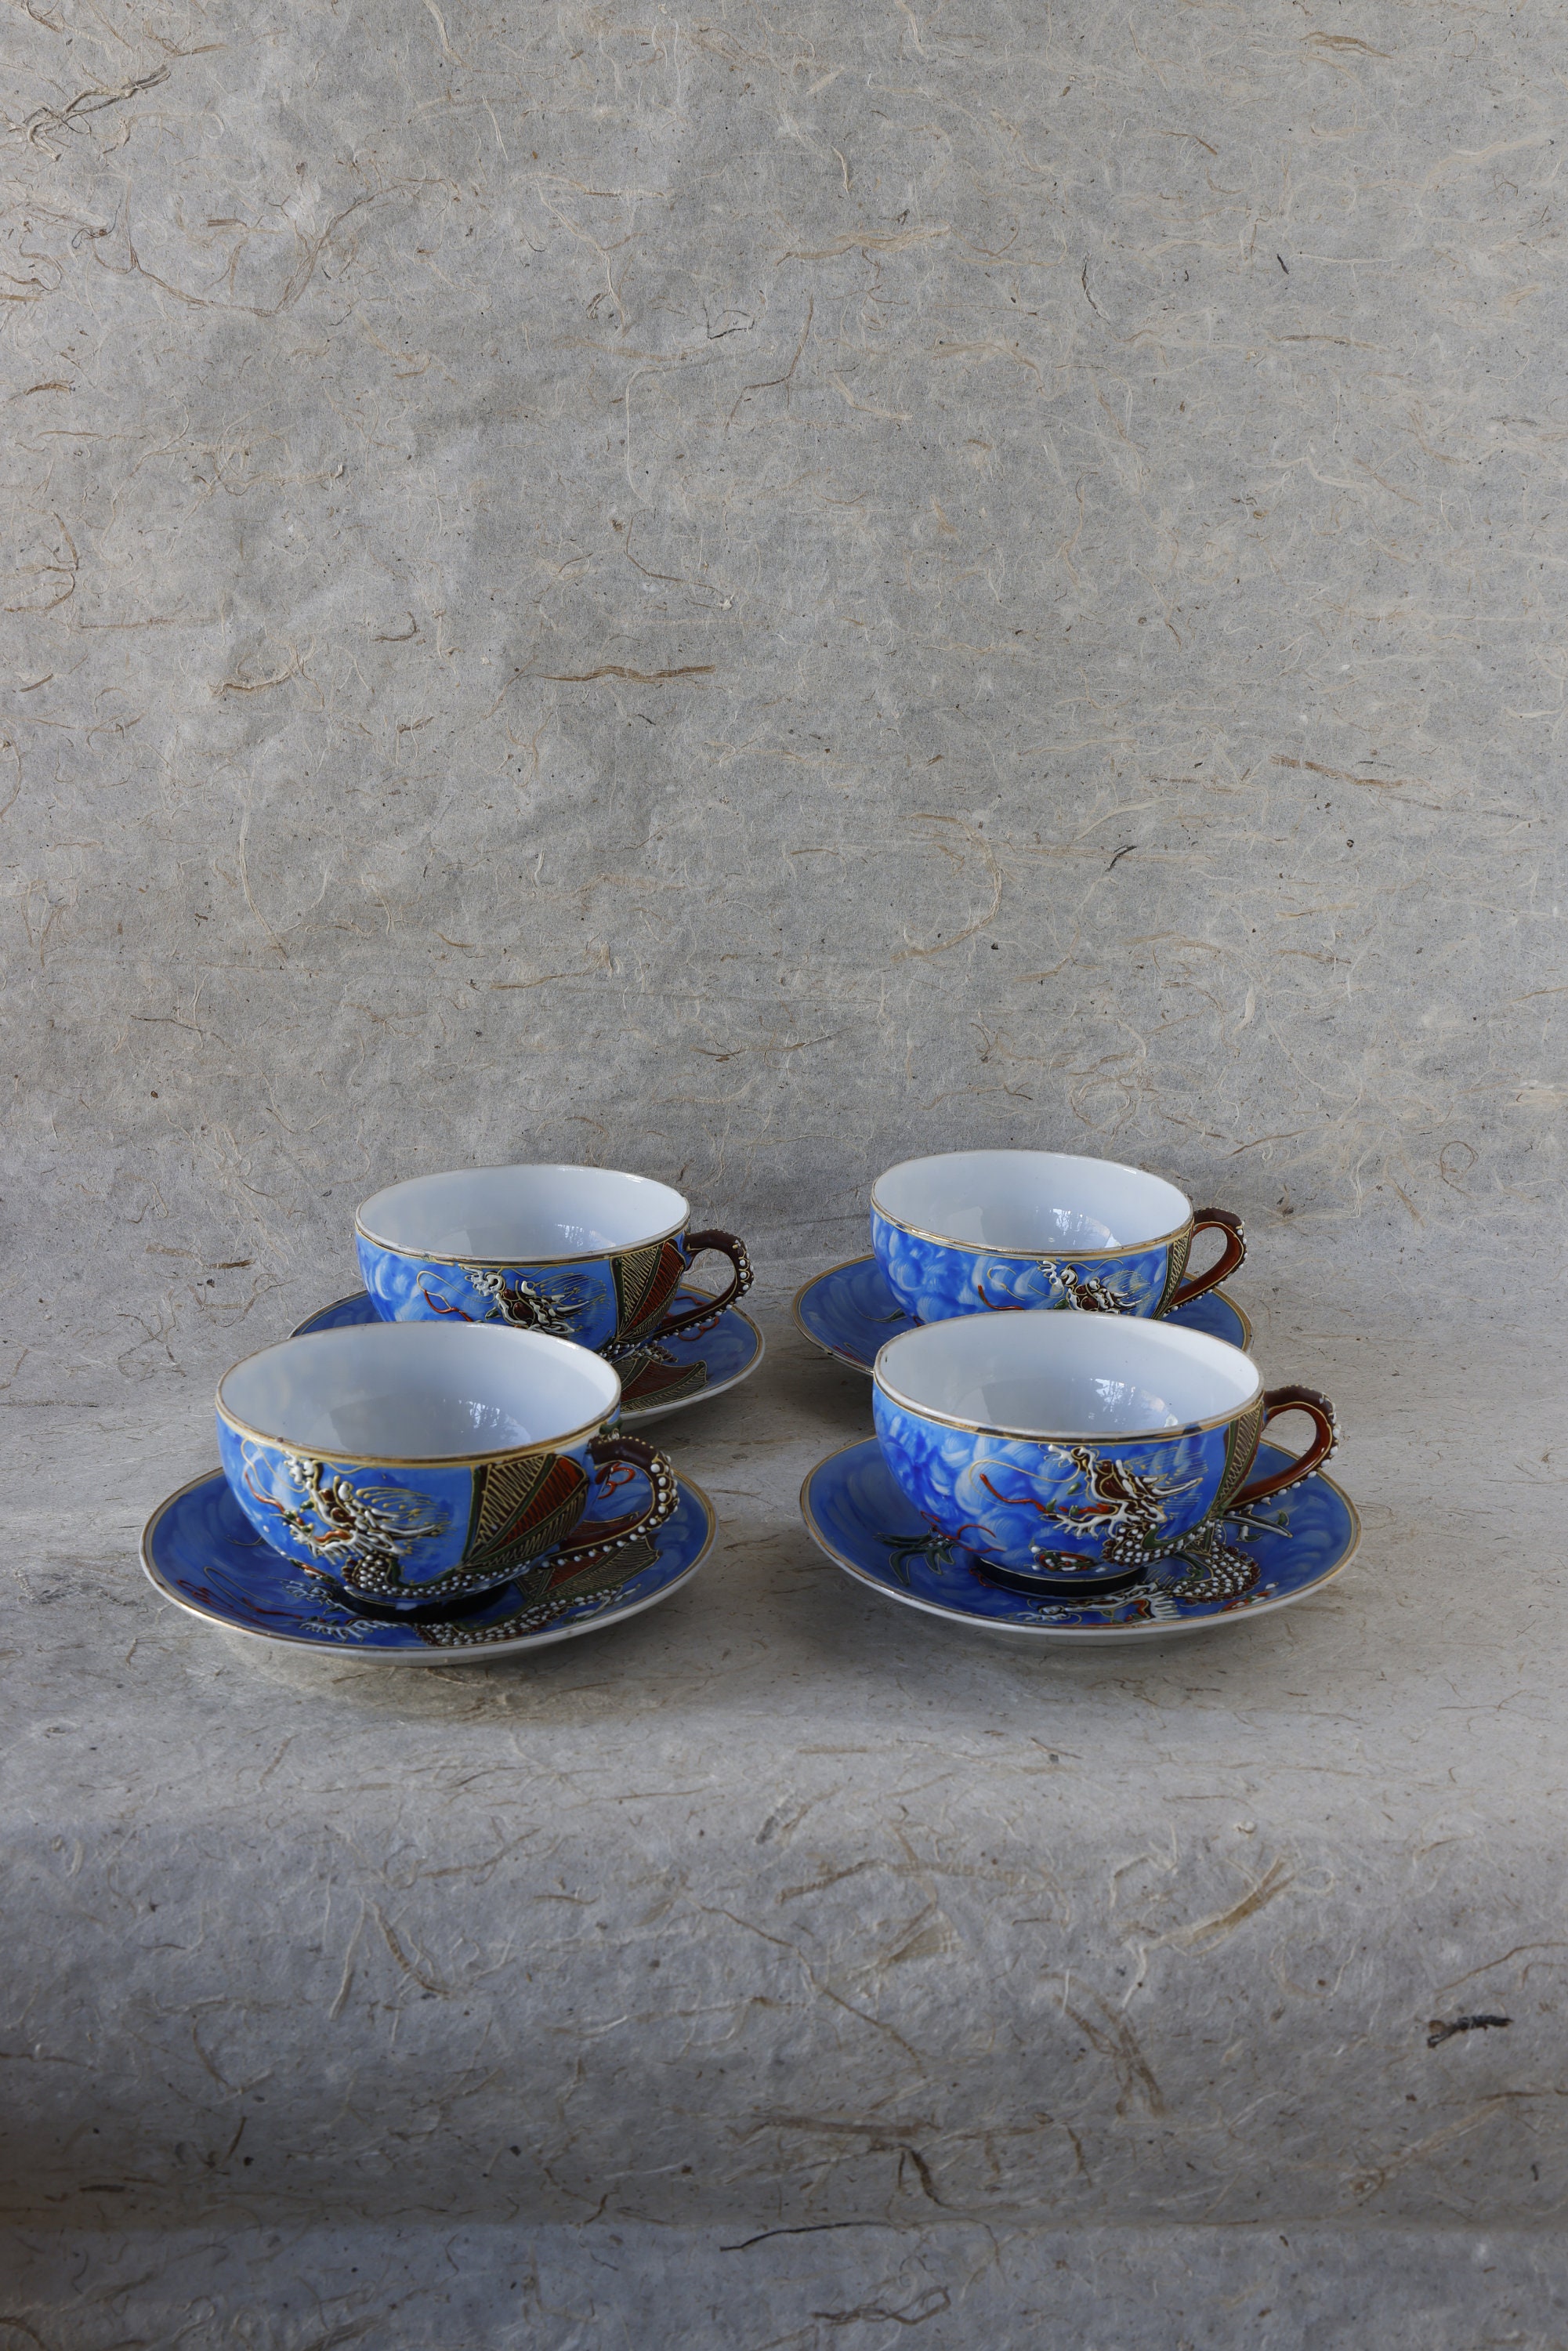 Kutani Tea Set for sale | Only 3 left at -75%